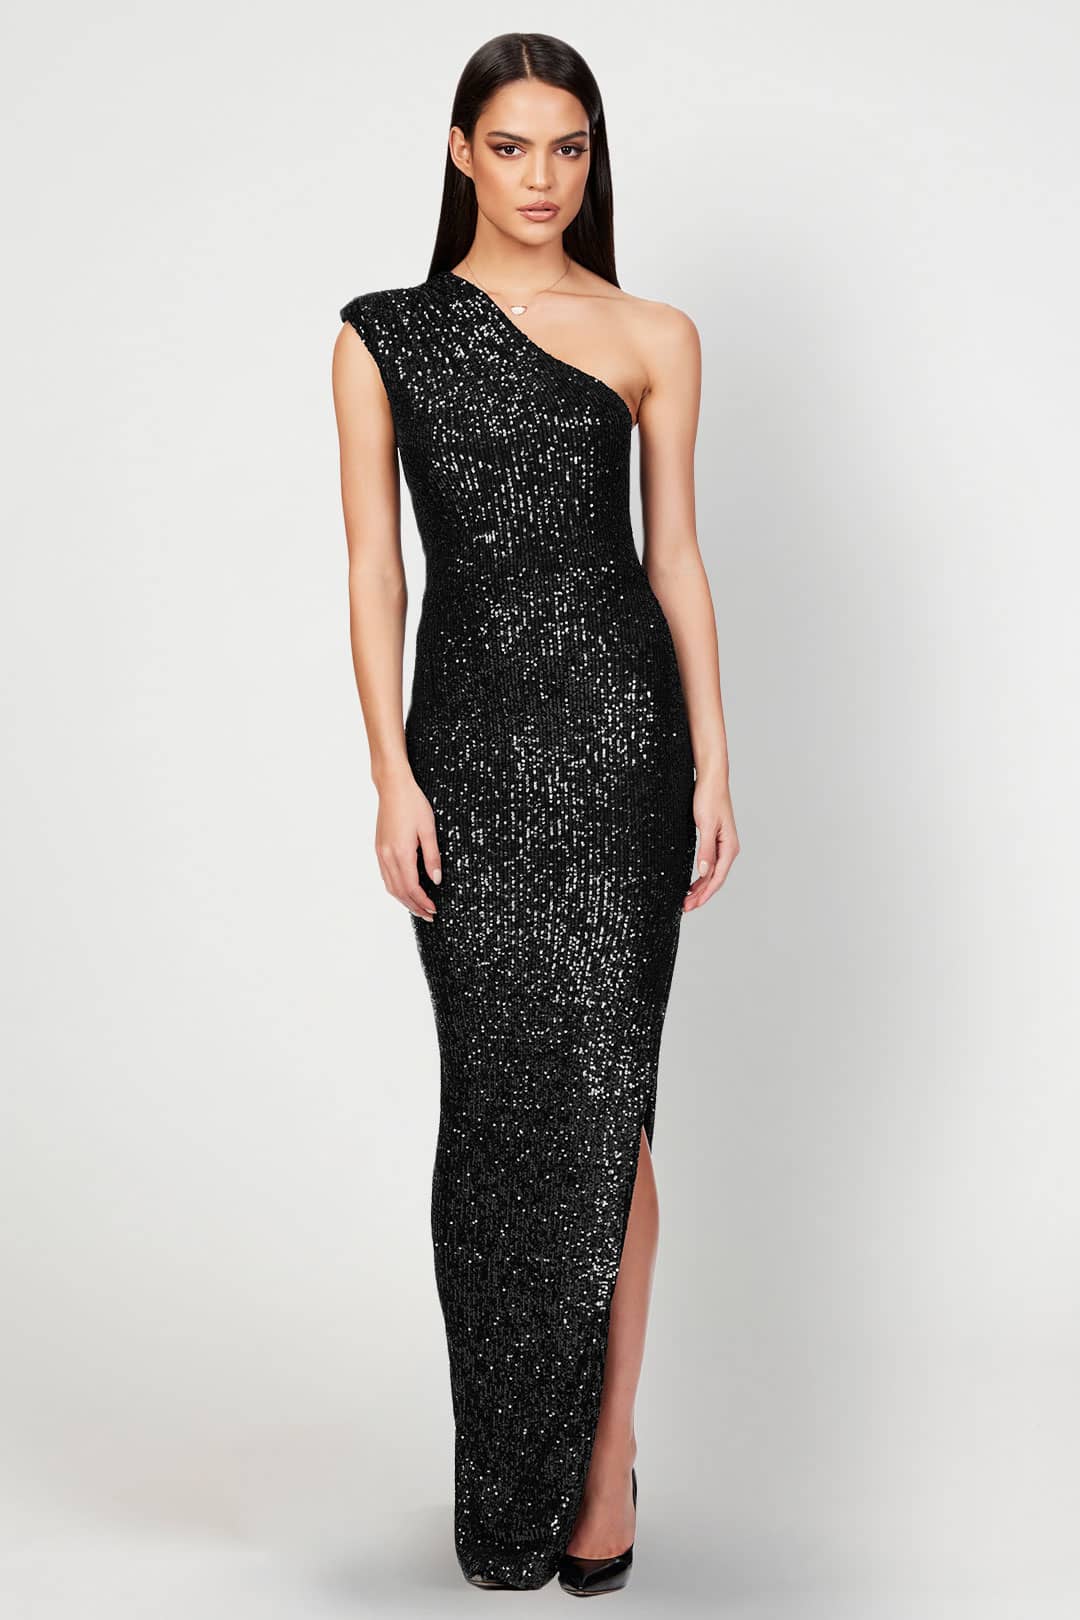 Black Asymmetrical Dress- Nookie Rent A Dress Gown and Dress Rental Front